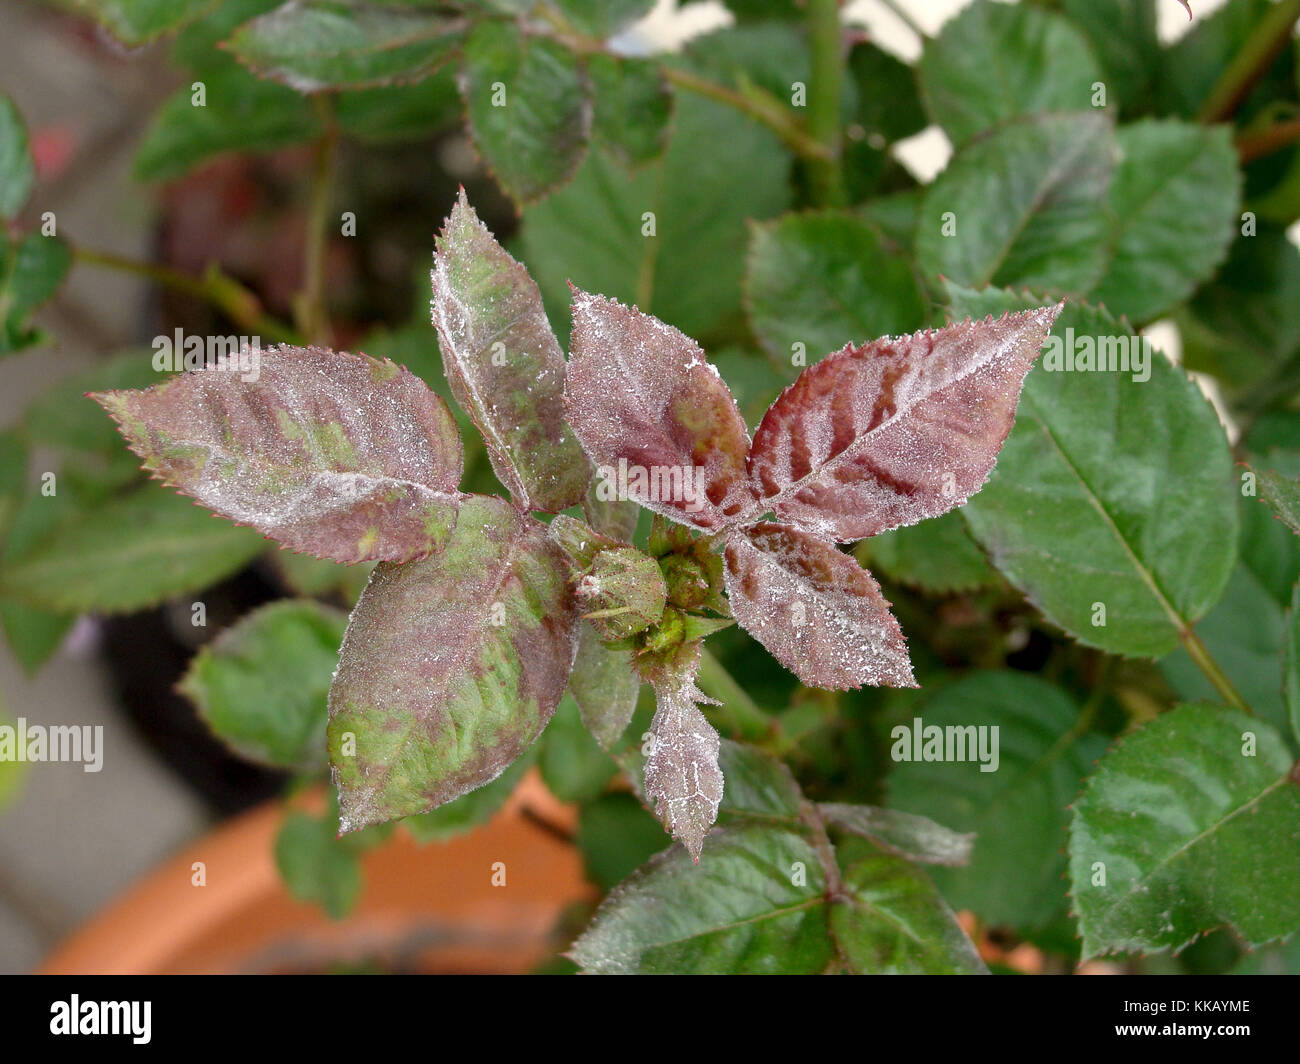 Rose di foglie di piante danneggiate da malattie fungine oidio close up  Foto stock - Alamy